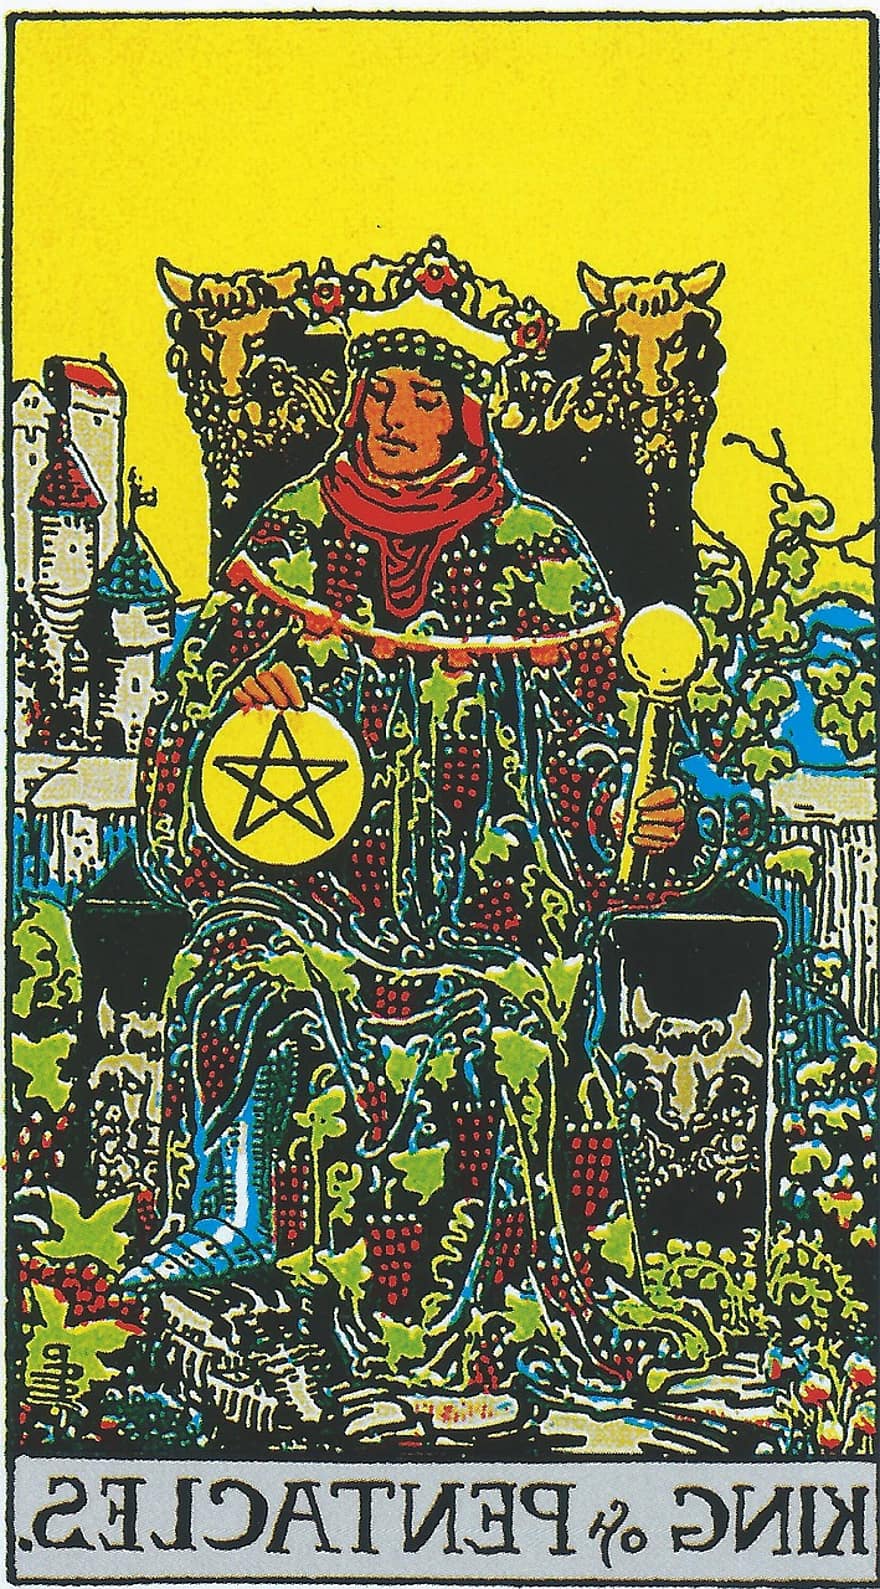 konge af pentakler, tarot kort, Mindre Arcana, Rider-waite Tarot Deck, divination, spiritualitet